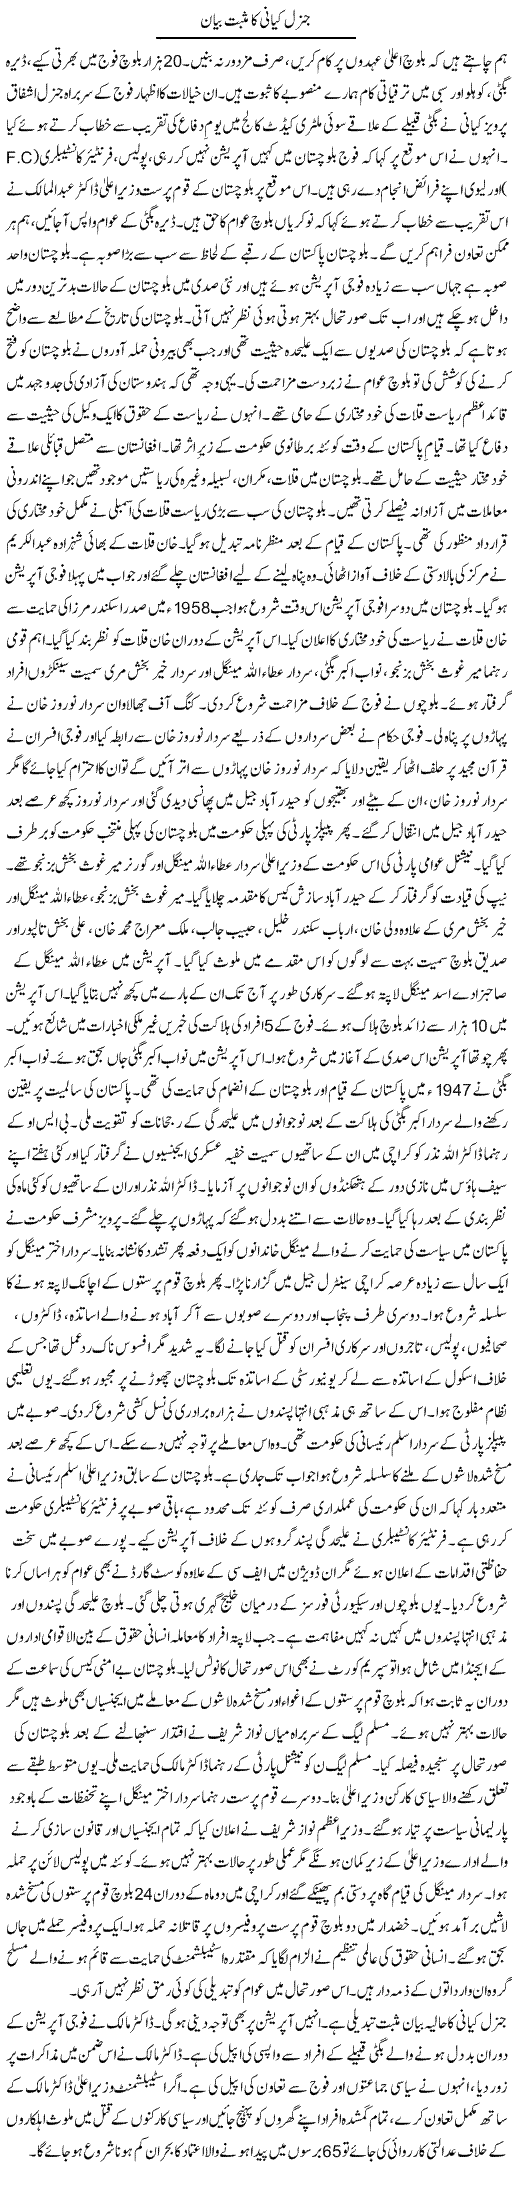 General Kiyani Ka Musbat Bayan | Tausif Ahmad Khan | Daily Urdu Columns